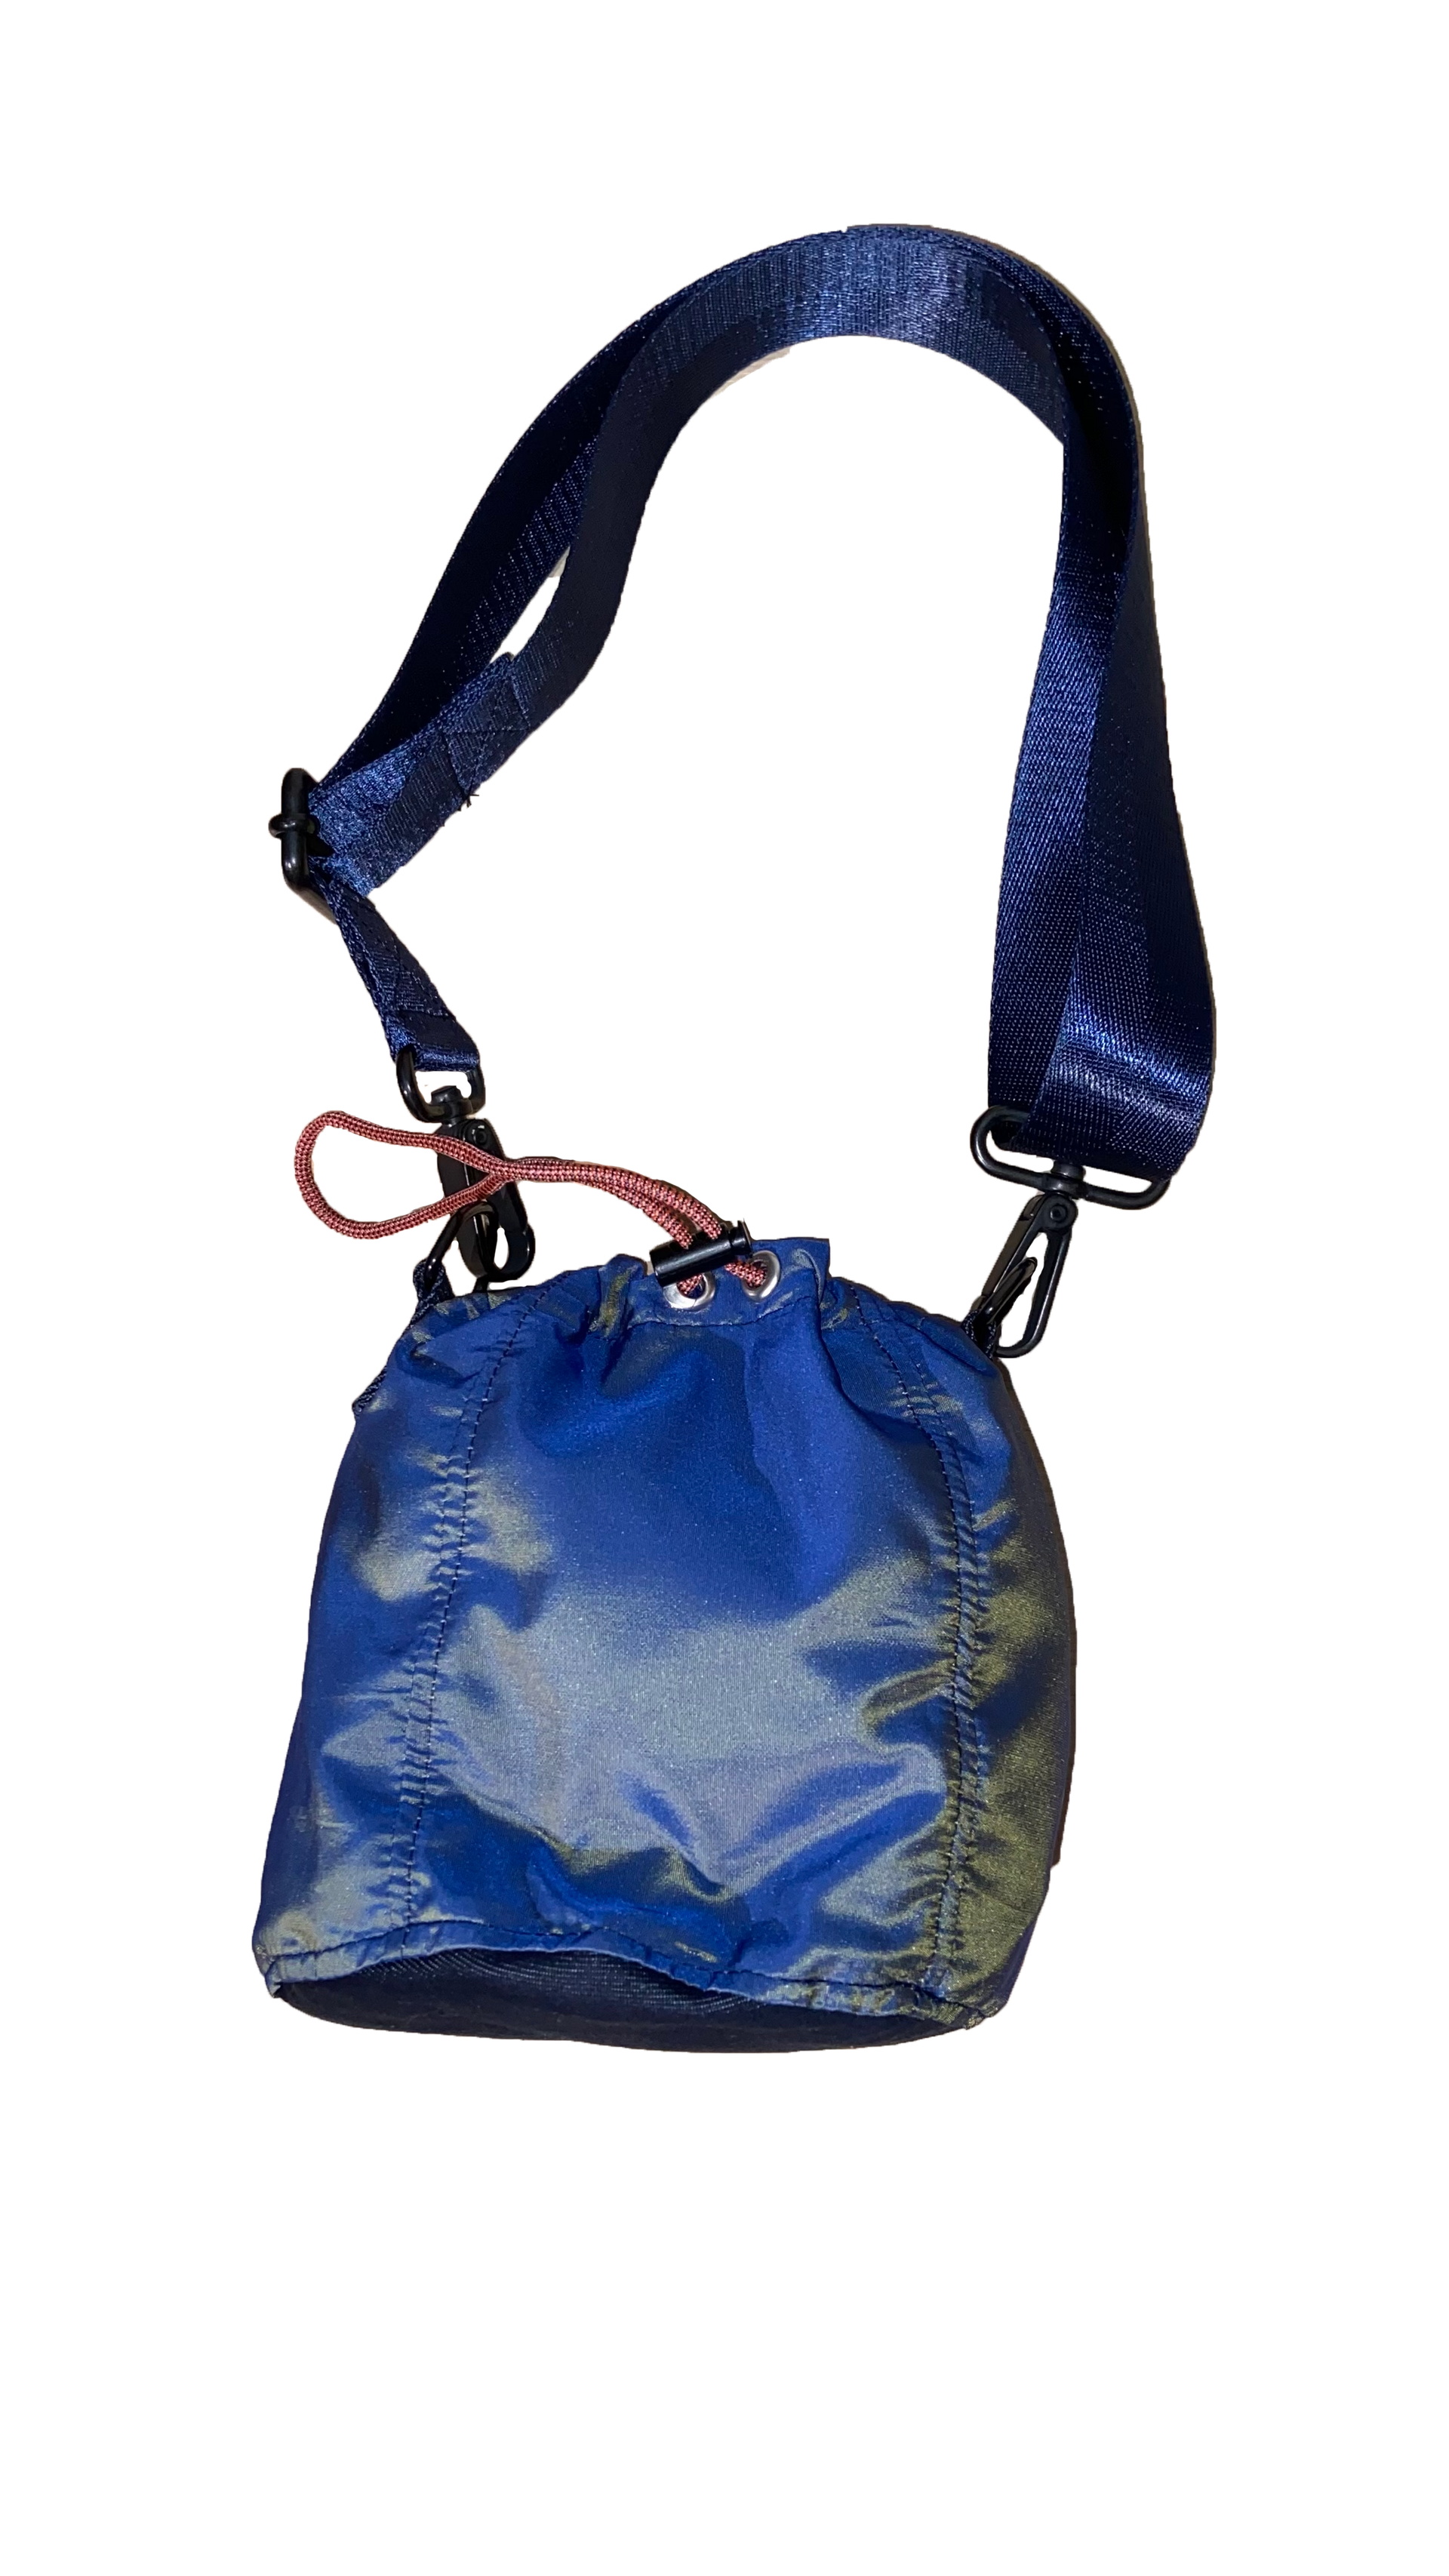 BAGDRP - BLUE IRIDESCENT POUCH BAG